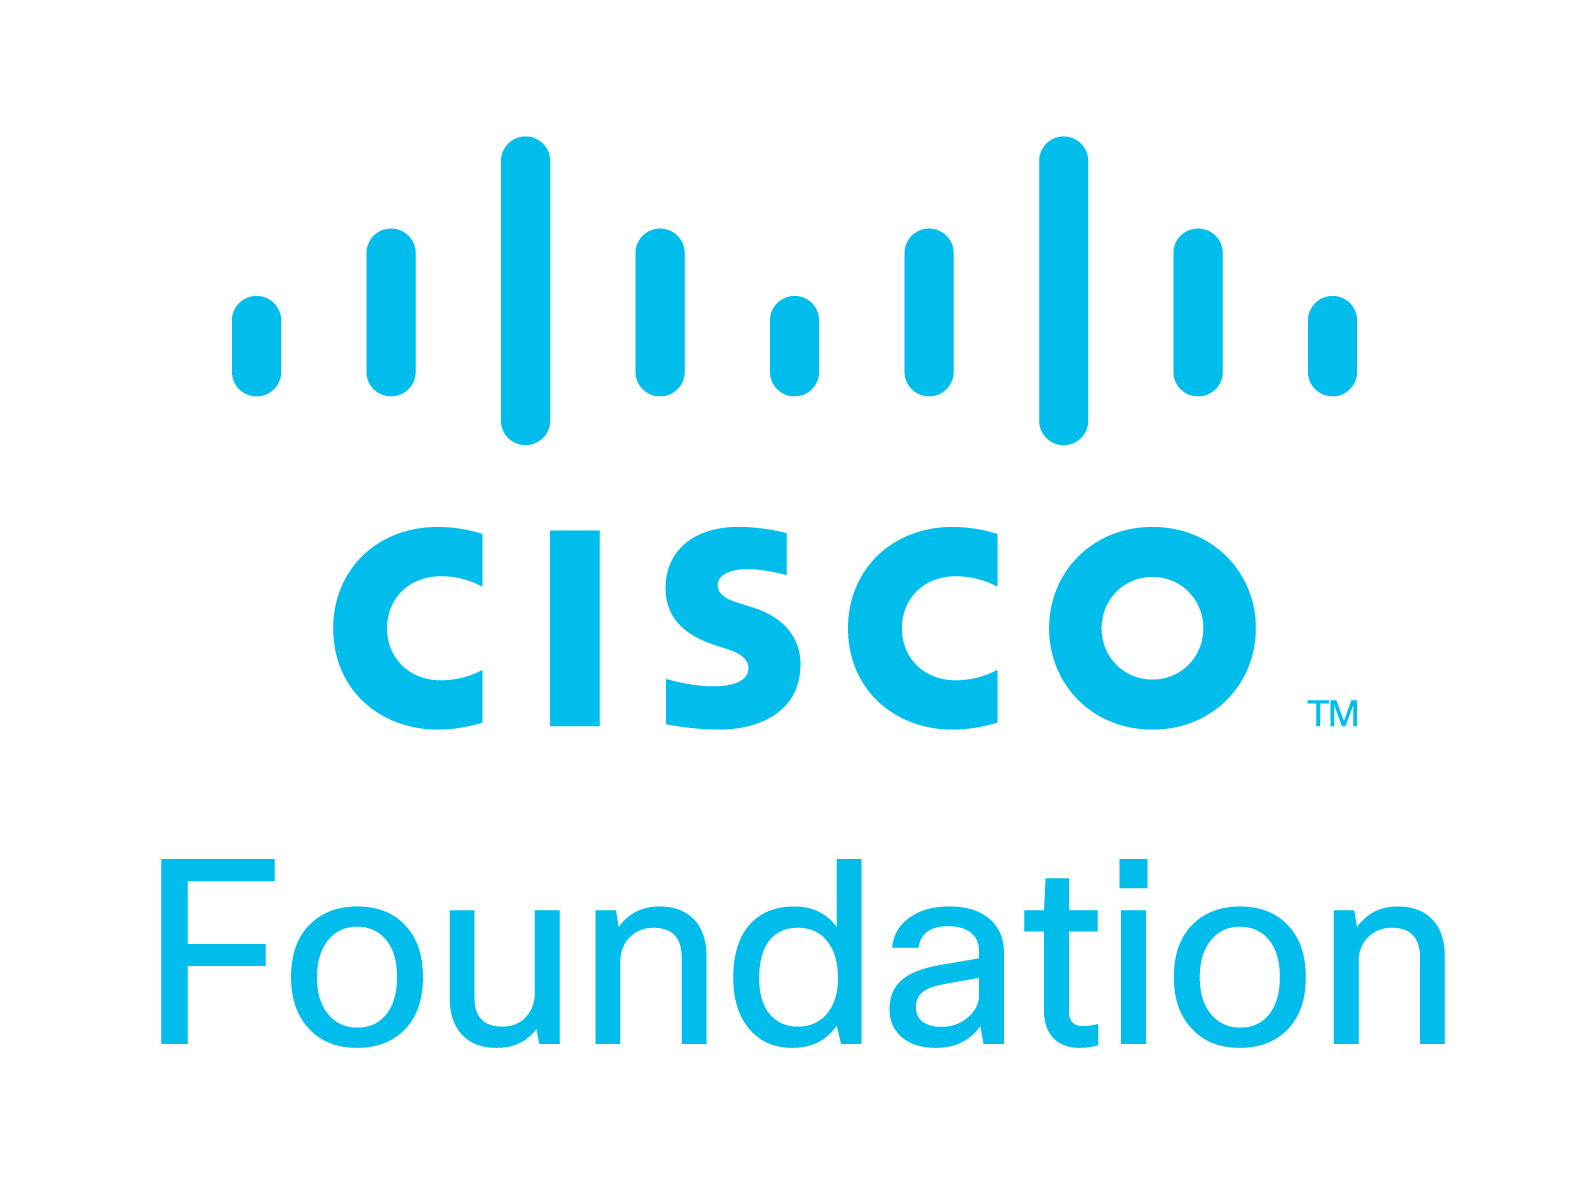 Cisco Foundation Logos - TM - vert